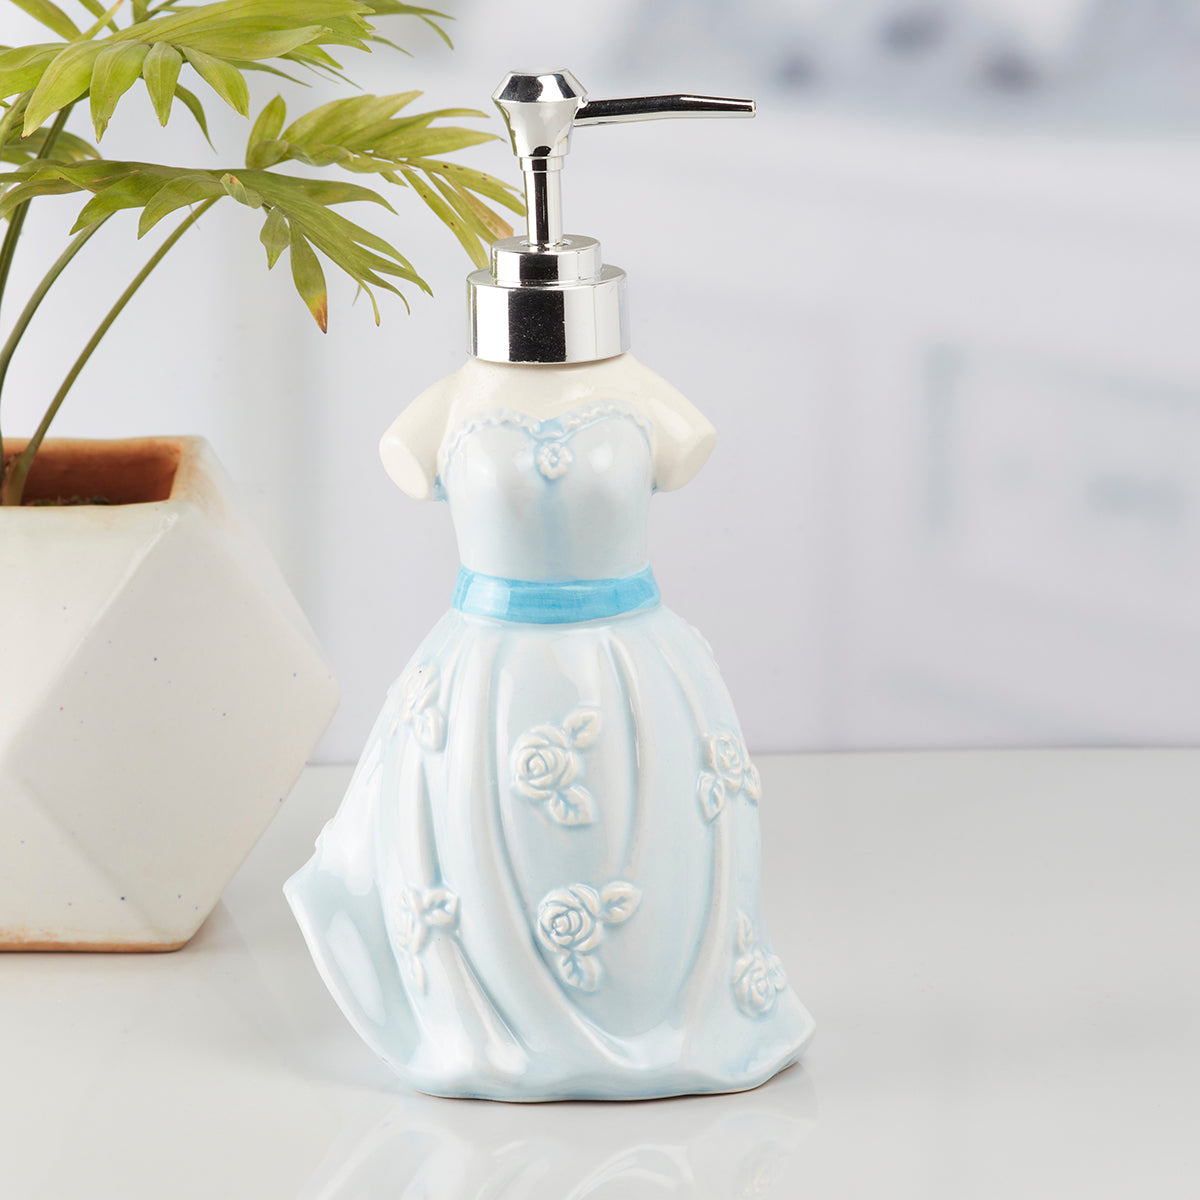 Ceramic Soap Dispenser handwash Pump for Bathroom, Set of 1, Blue (10163)